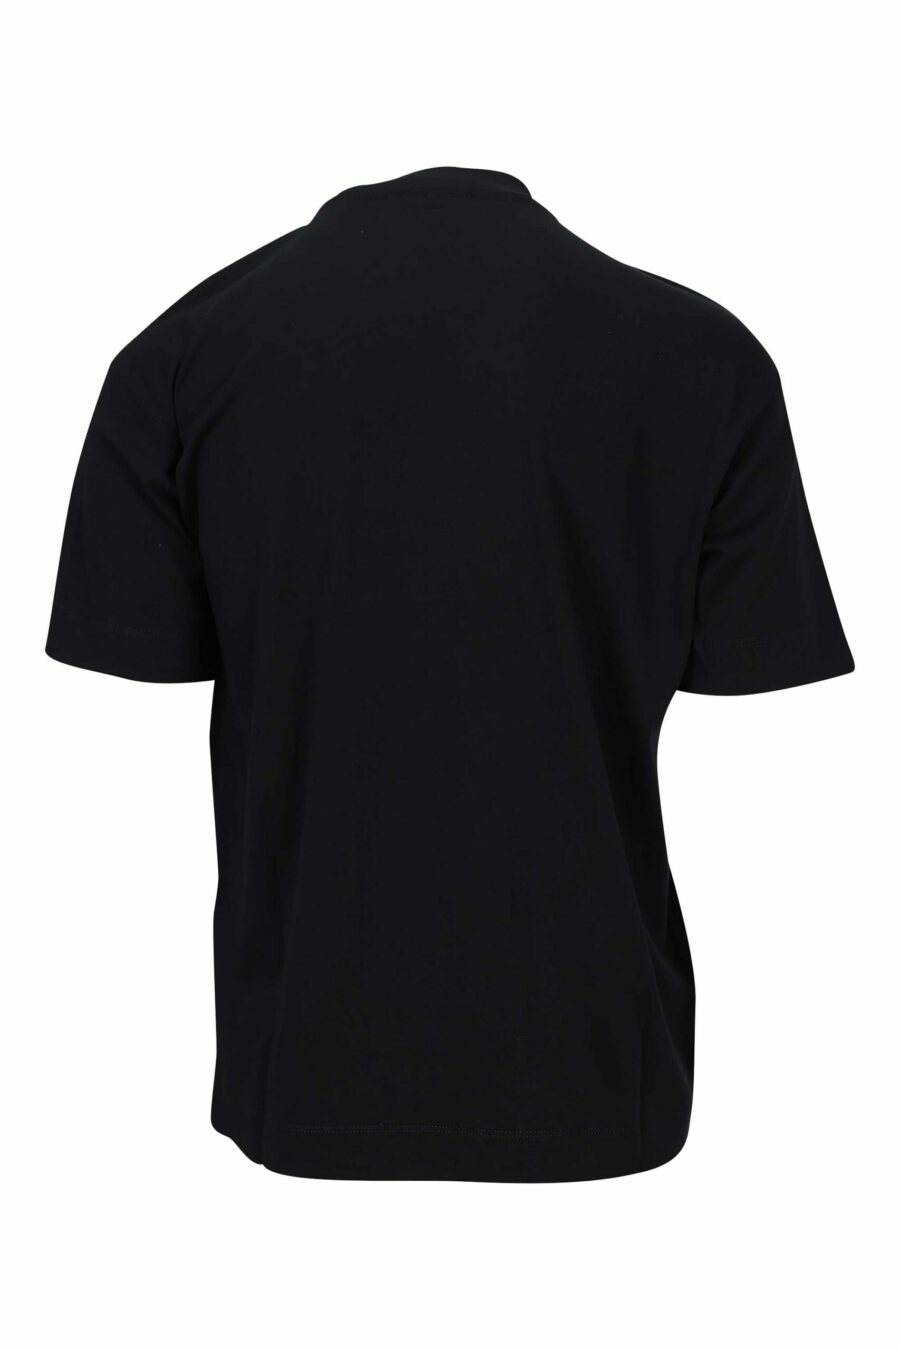 Schwarzes T-Shirt mit monochromem Adler-Maxilogo - 8057970432920 1 skaliert